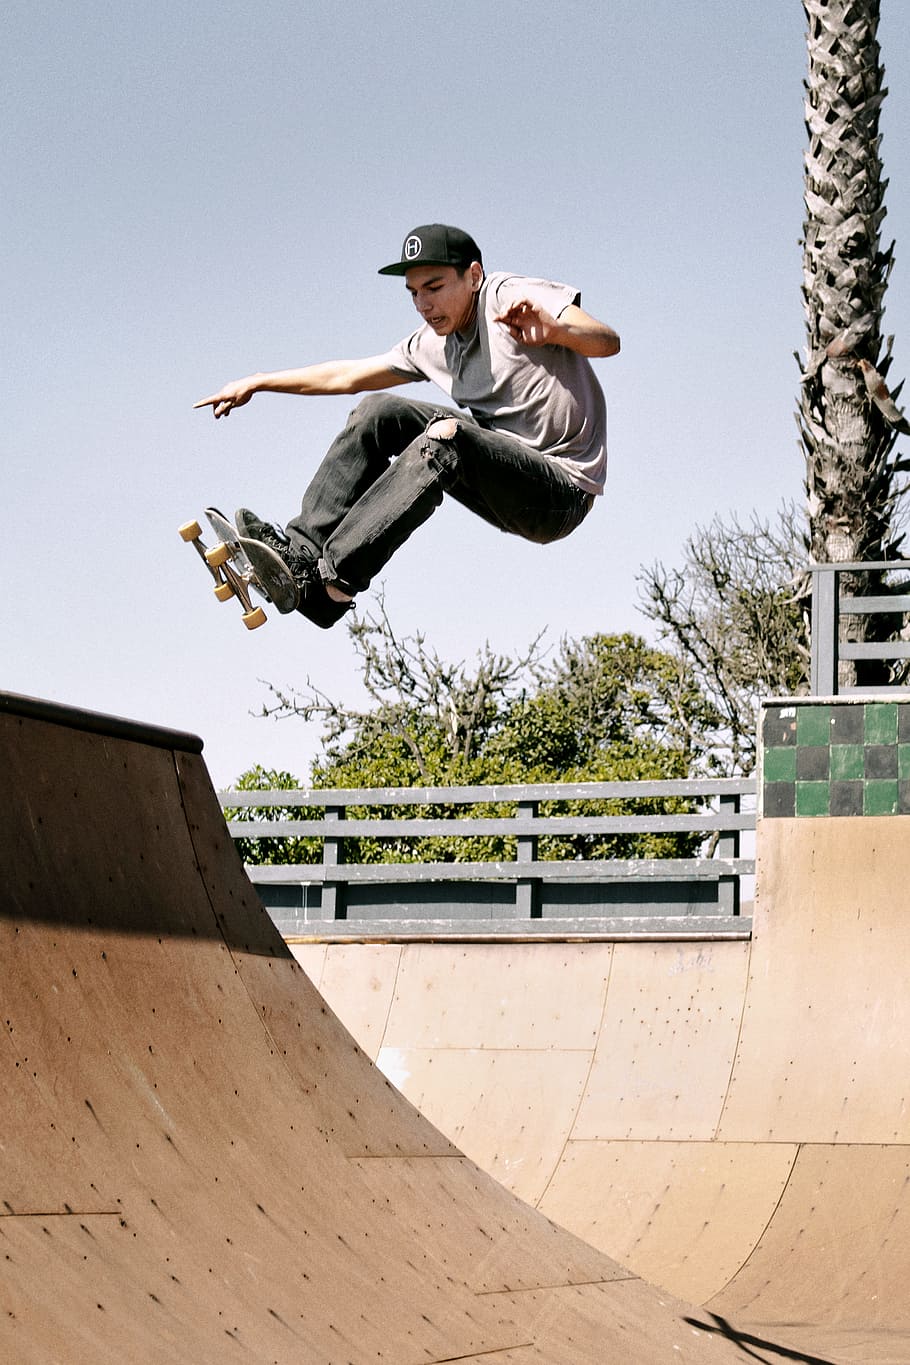 wallpaper: man performing tricks, jump, leap, extreme, skater | Flare